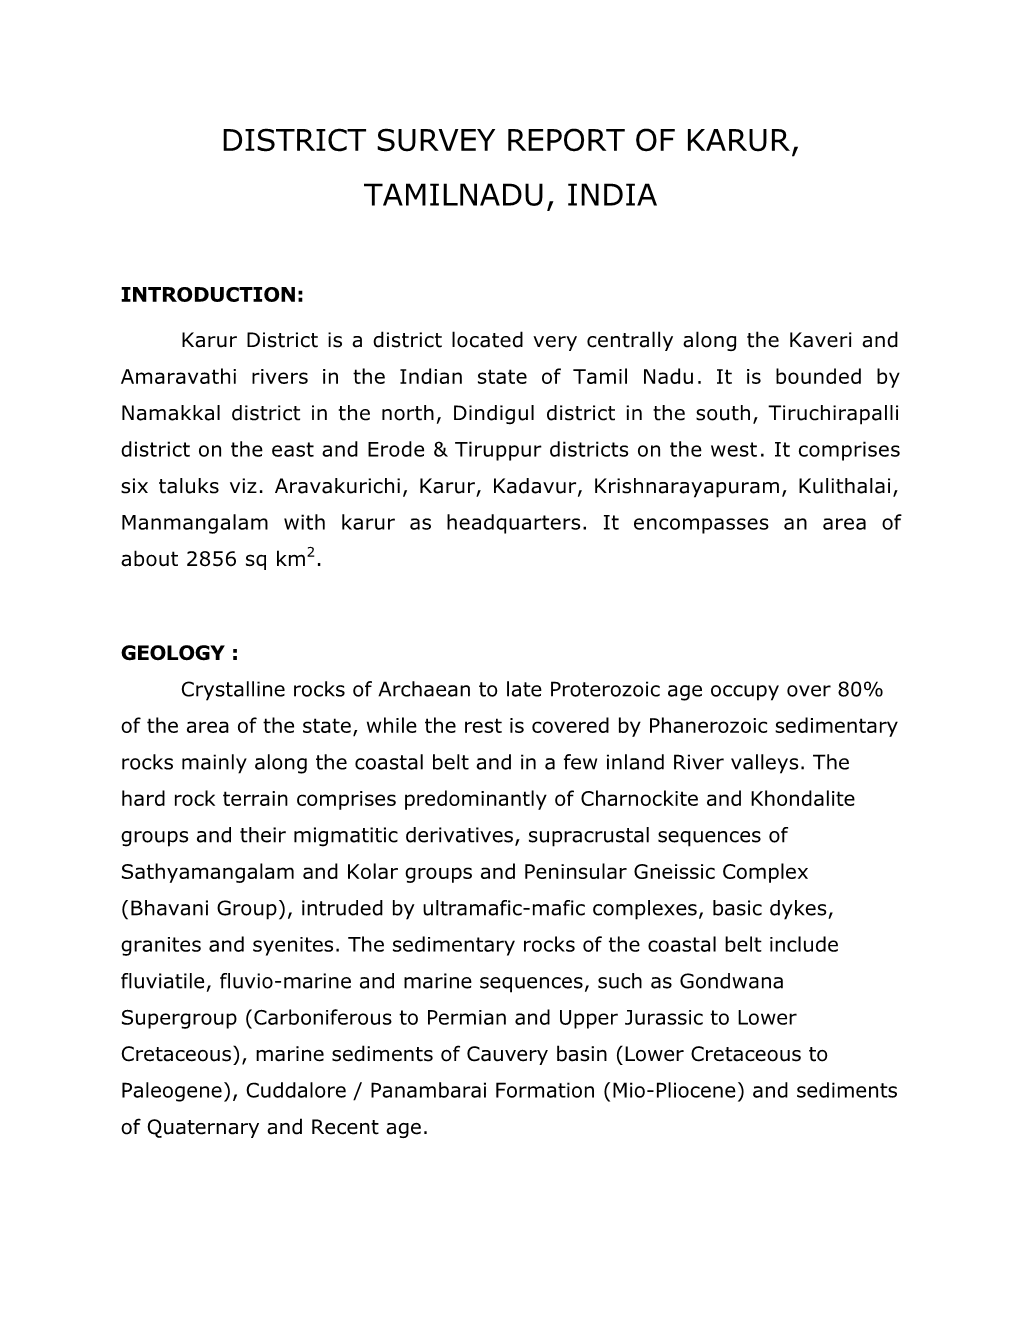 District Survey Report of Karur, Tamilnadu, India